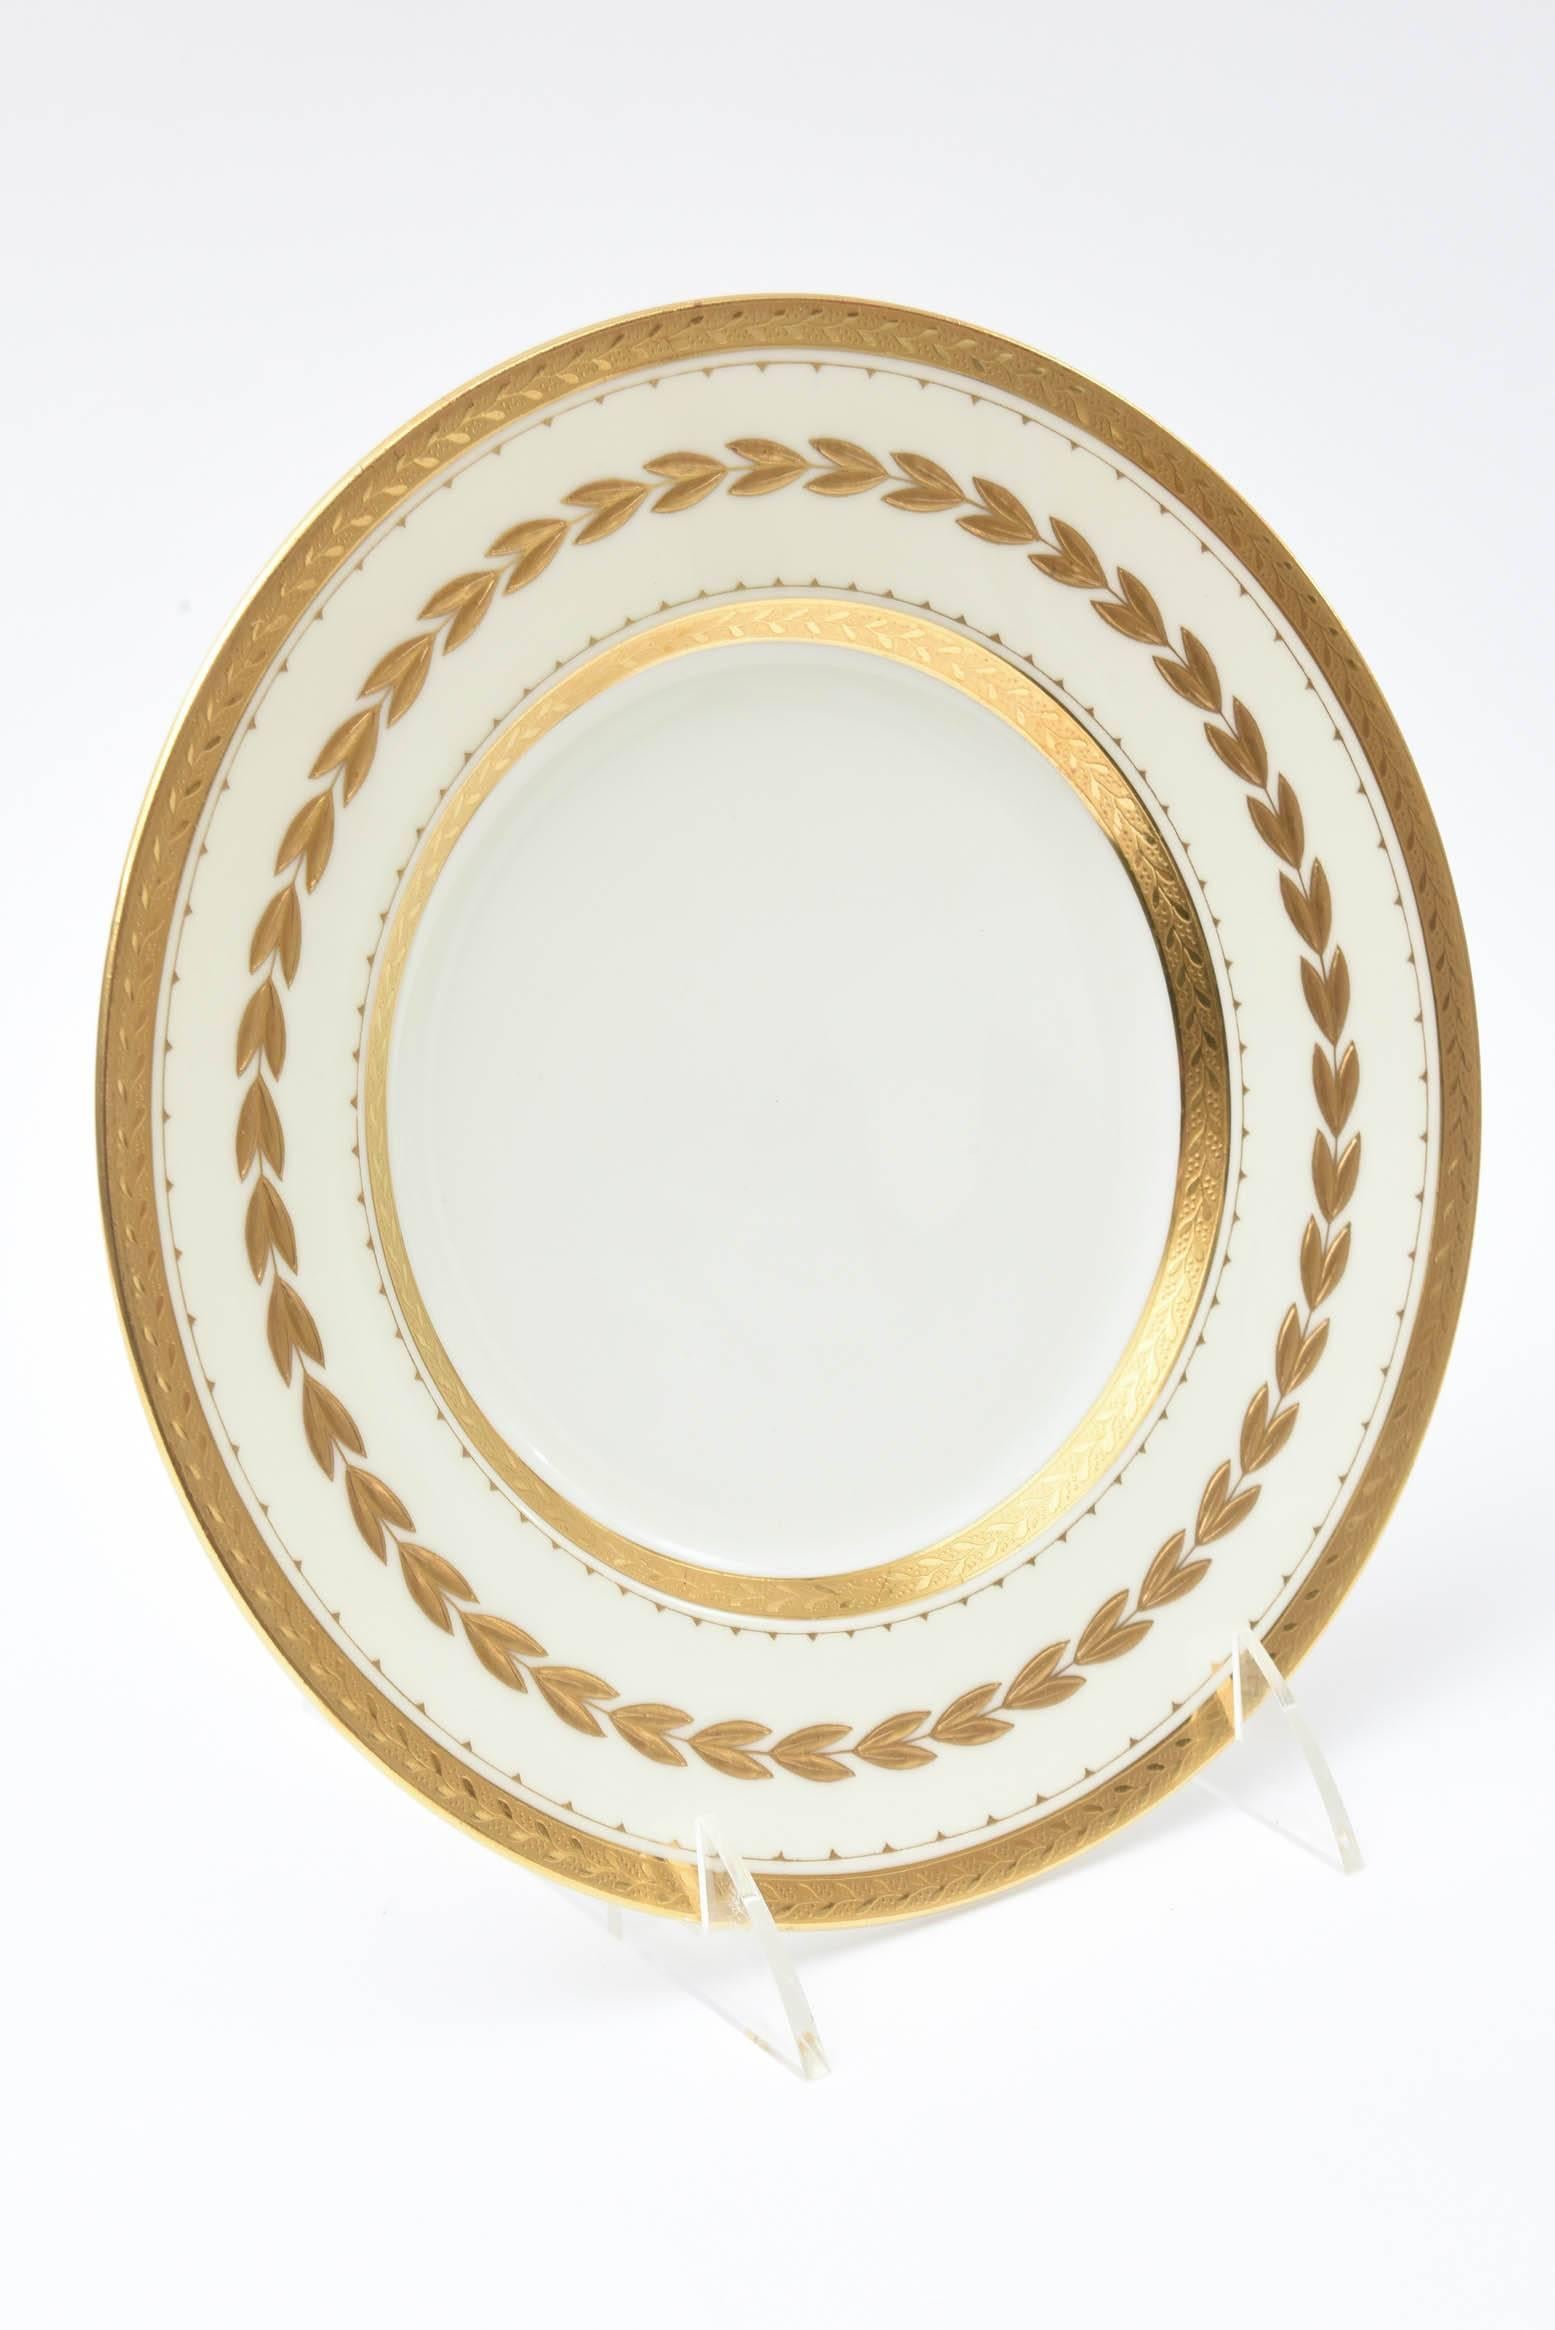 12 Tiffany Heavy Raised Gold Dessert or Salad Porcelain Plates, Antique English 2